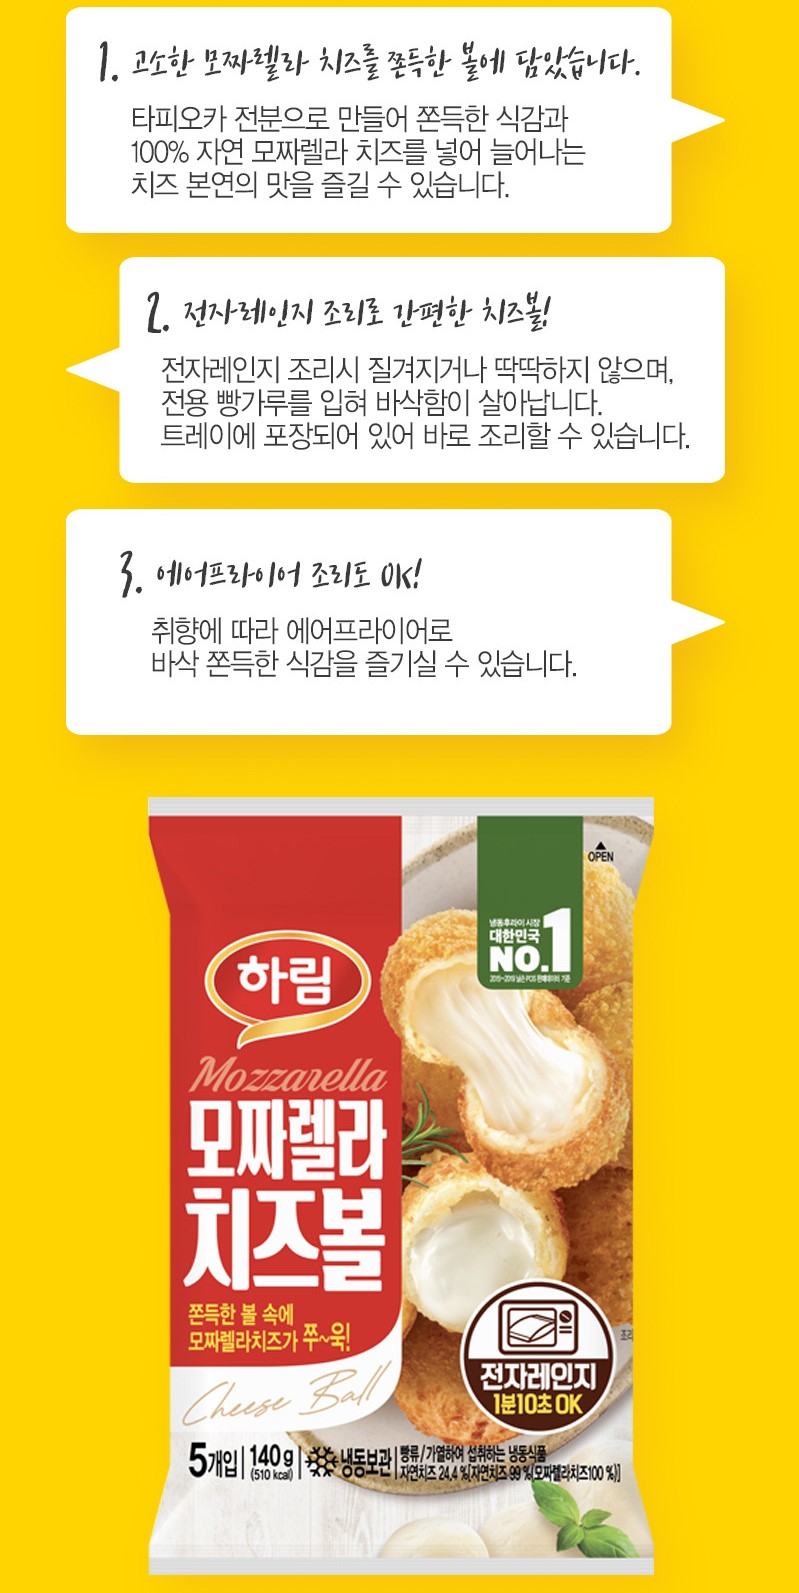 韓國食品-[Harim] Mozzarella Cheese Ball 140g